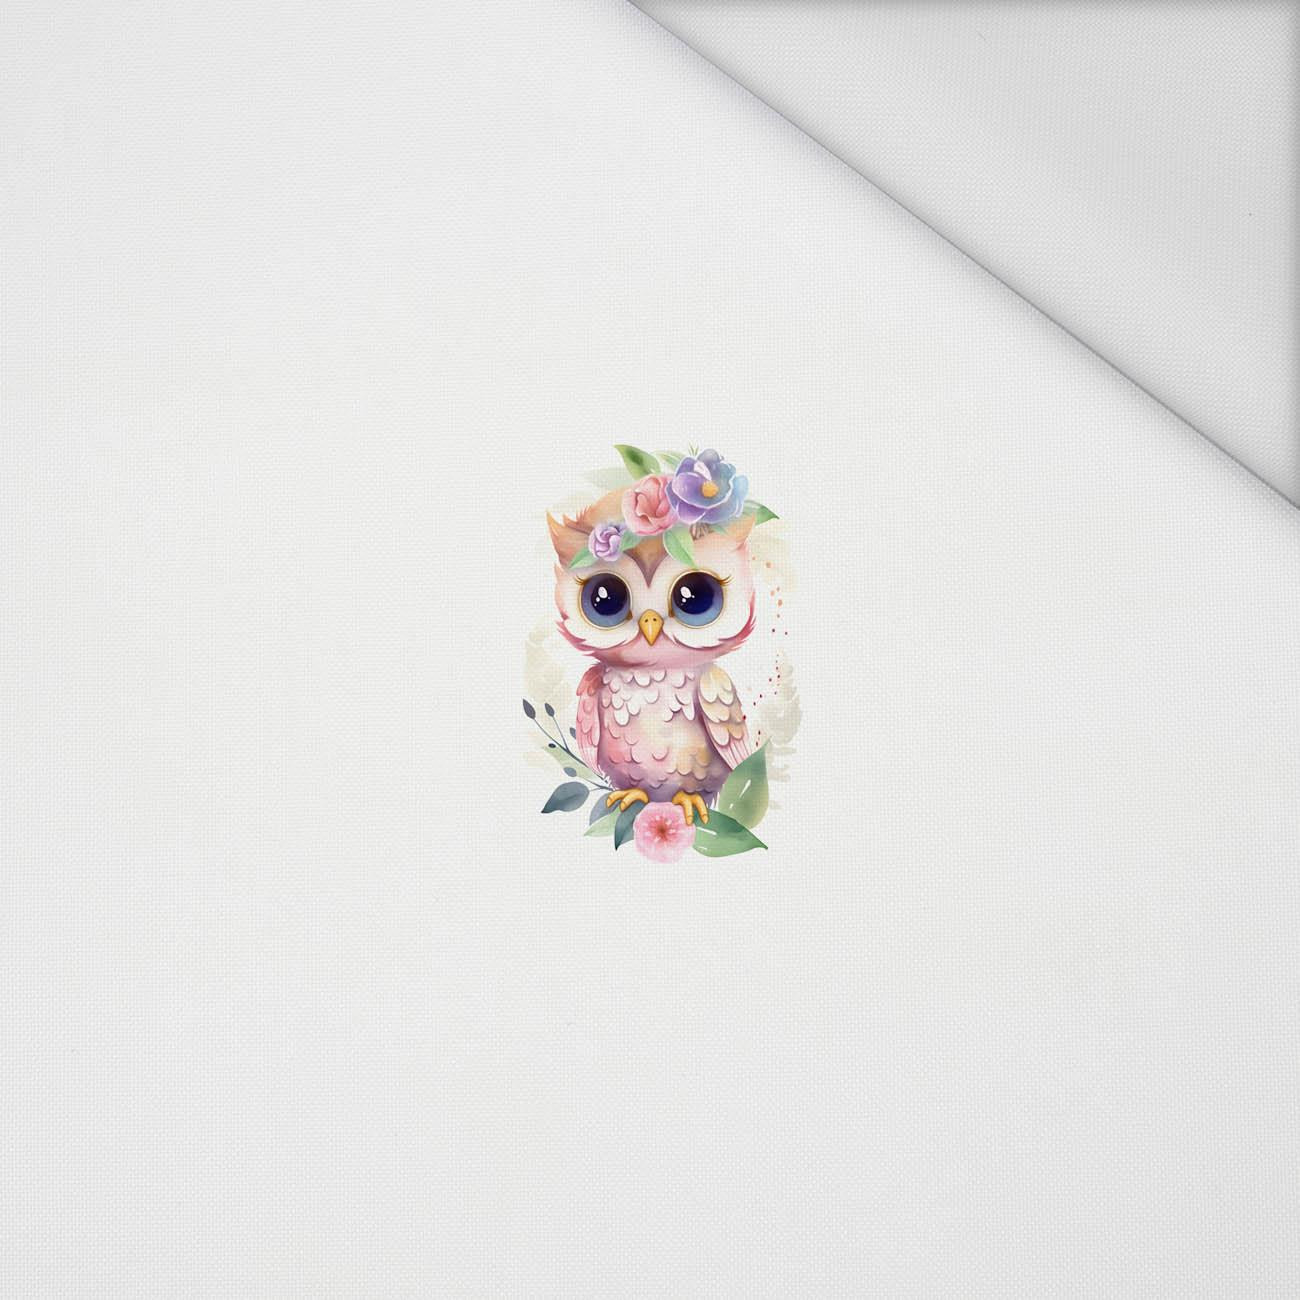 BABY OWL - Paneel (60cm x 50cm) Wasserabweisende Webware